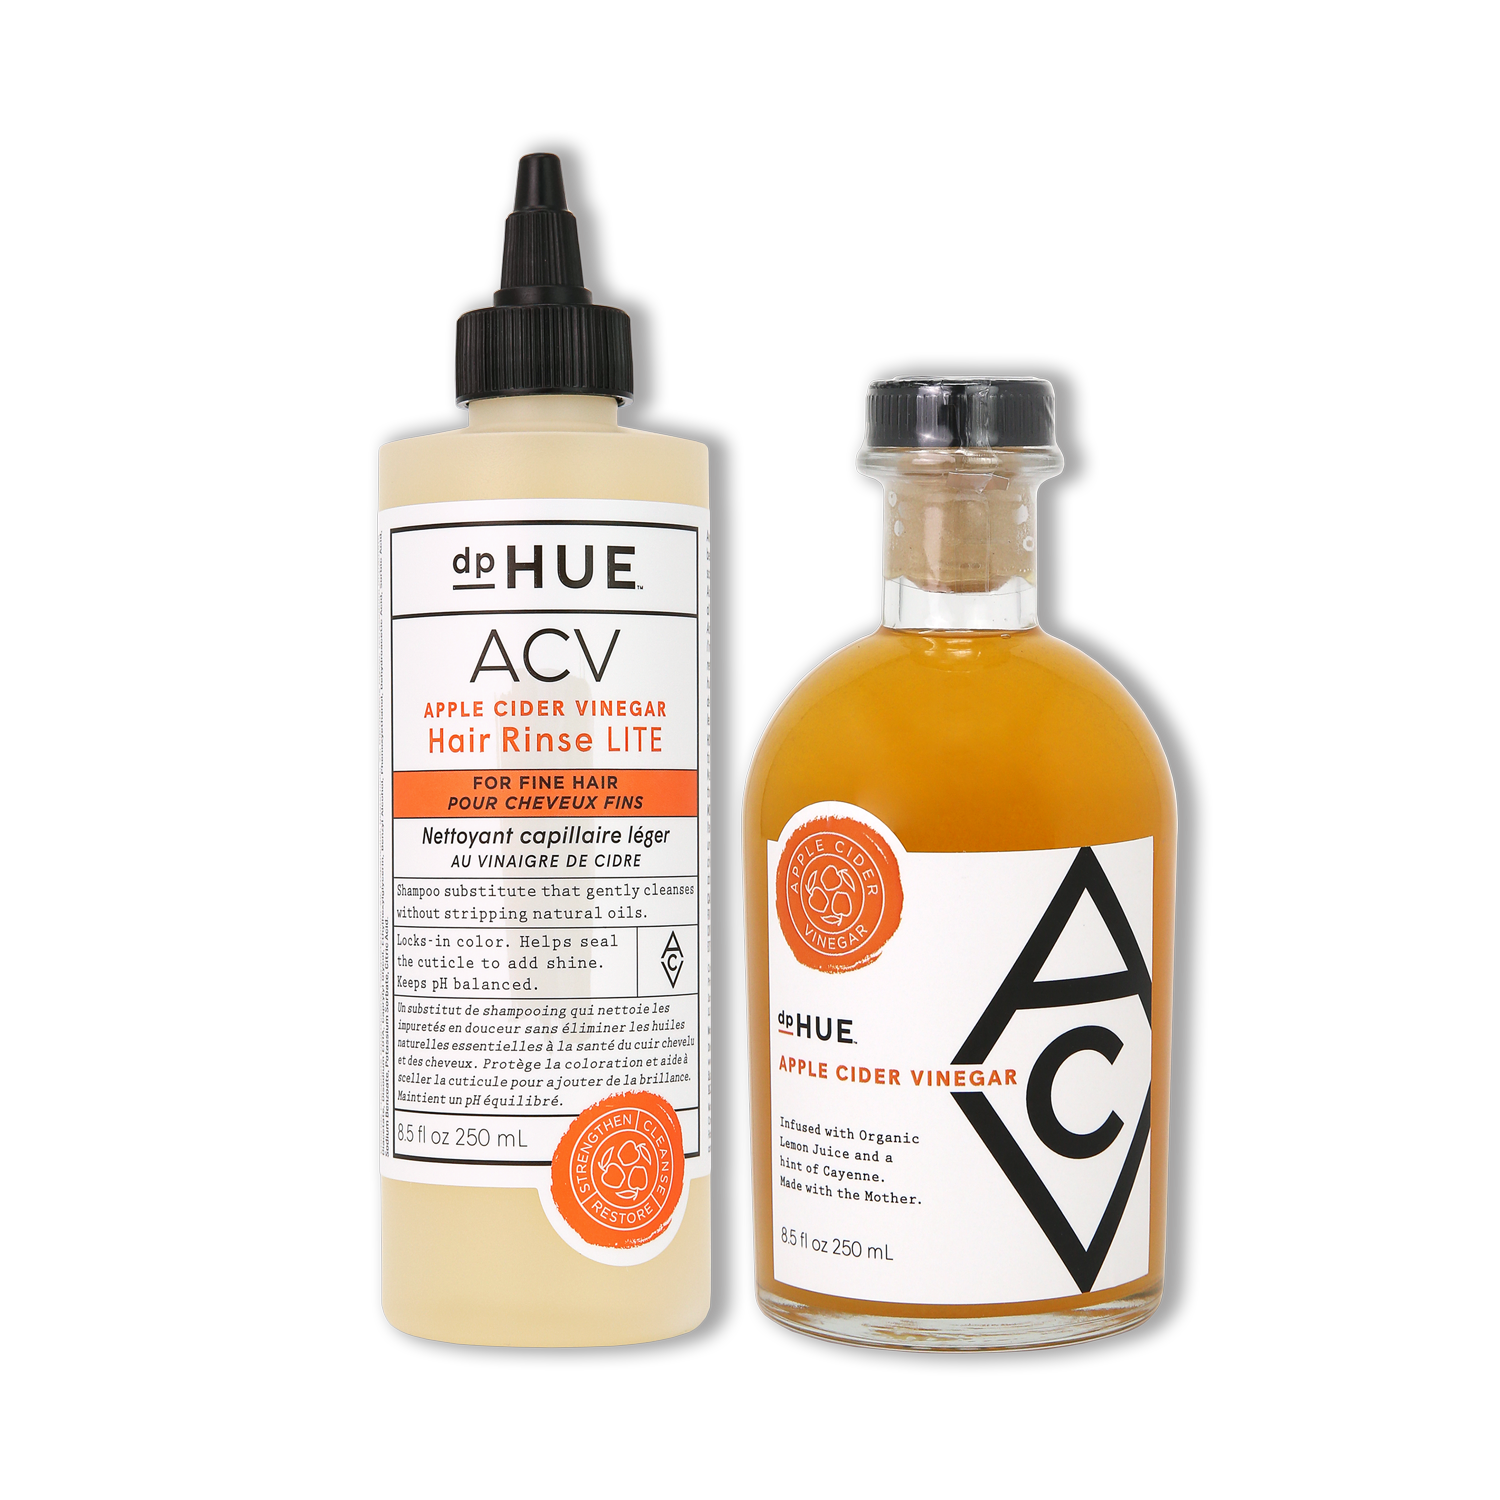 ACV Hair Rinse Lite